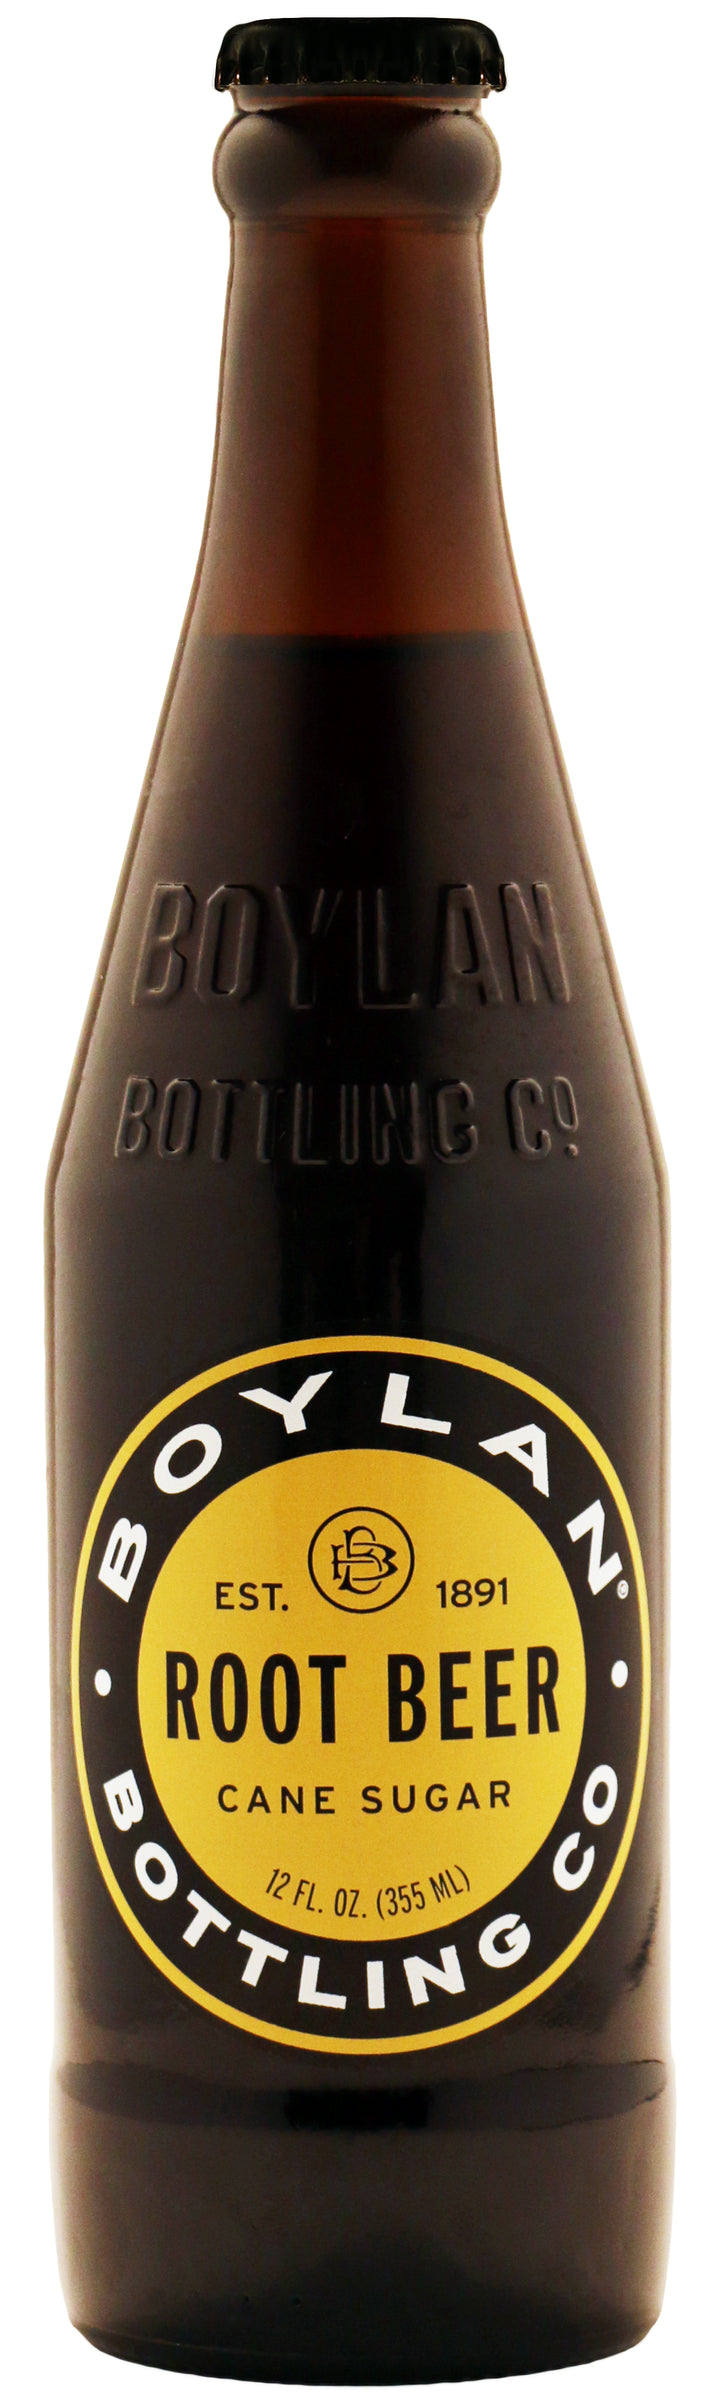 Boylan Bottling Root Beer Bottle-12 fl. oz.-4/Box-6/Case